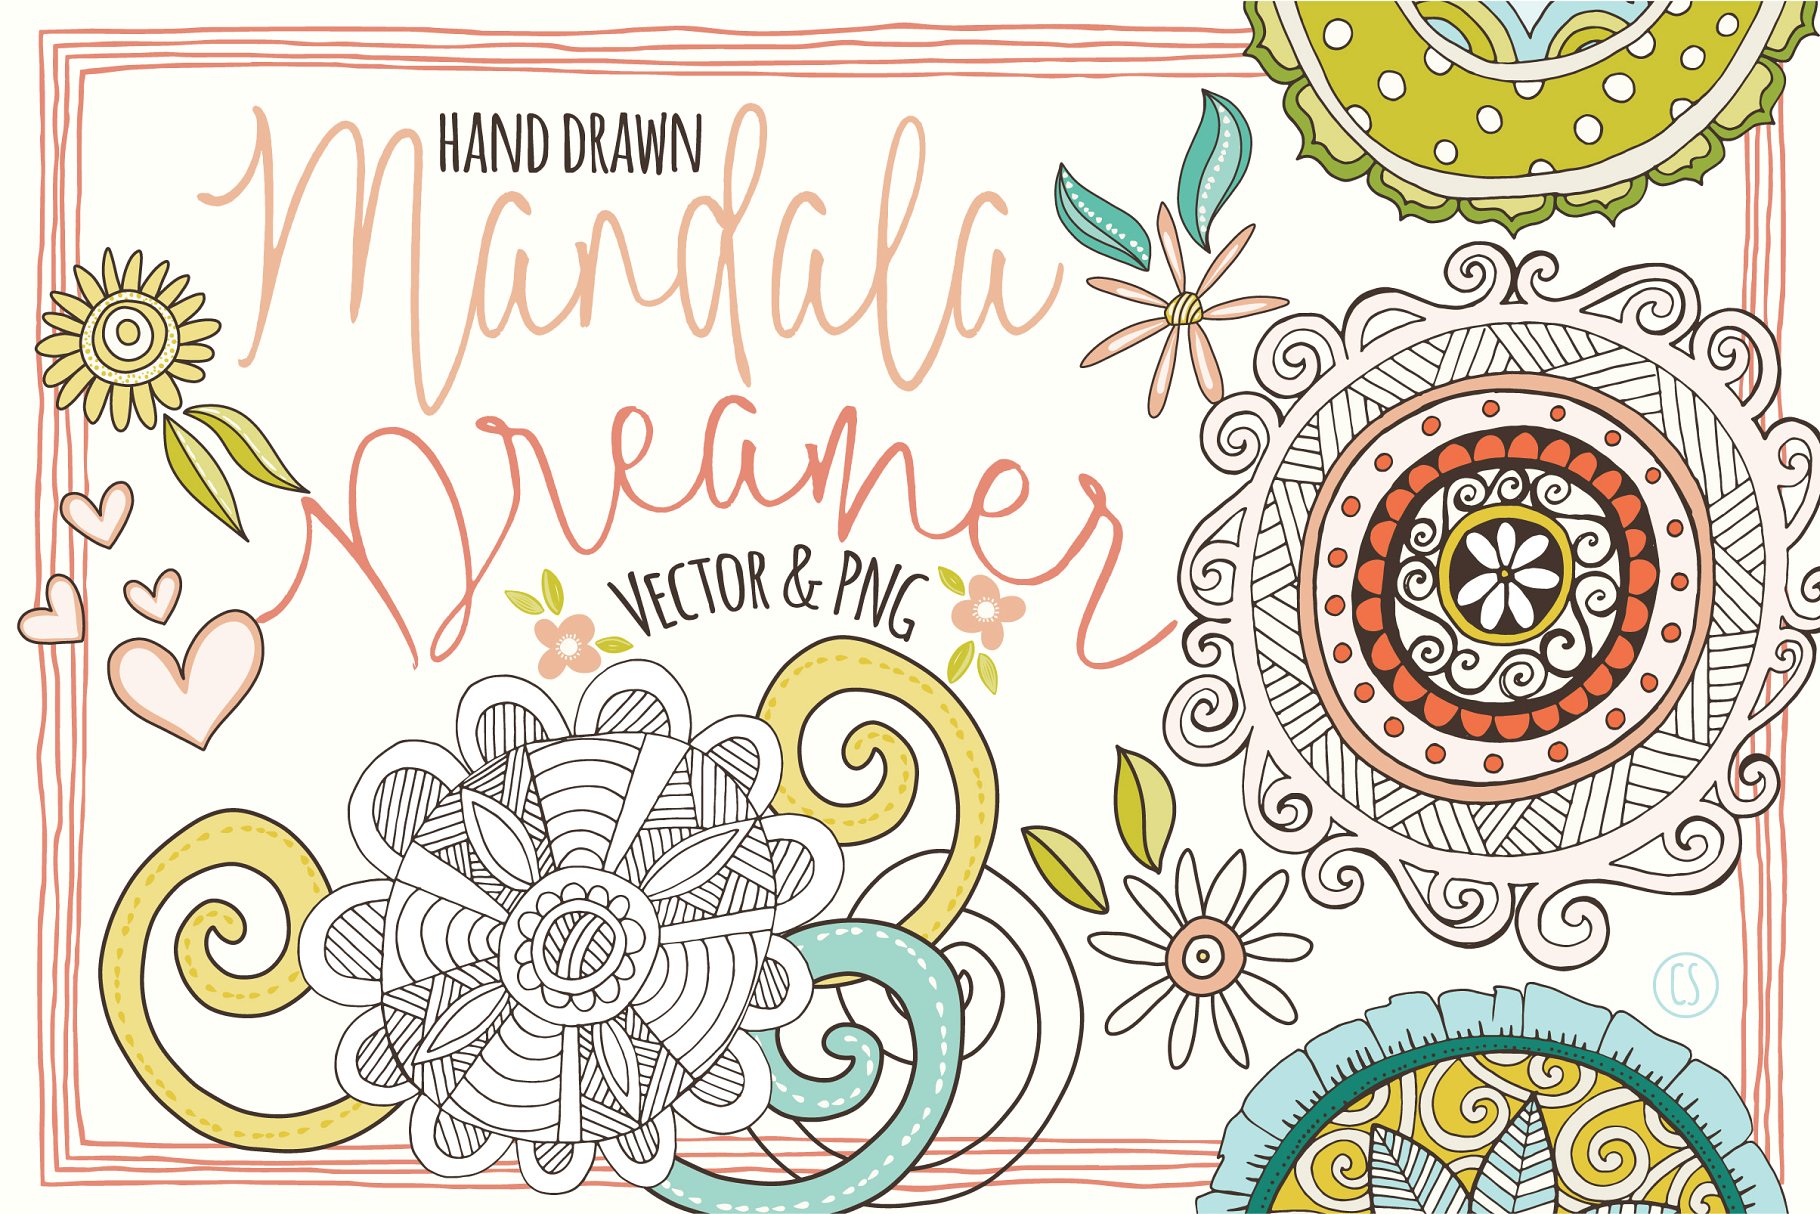 曼荼罗手绘矢量插图 Mandala Vector Illustrations插图